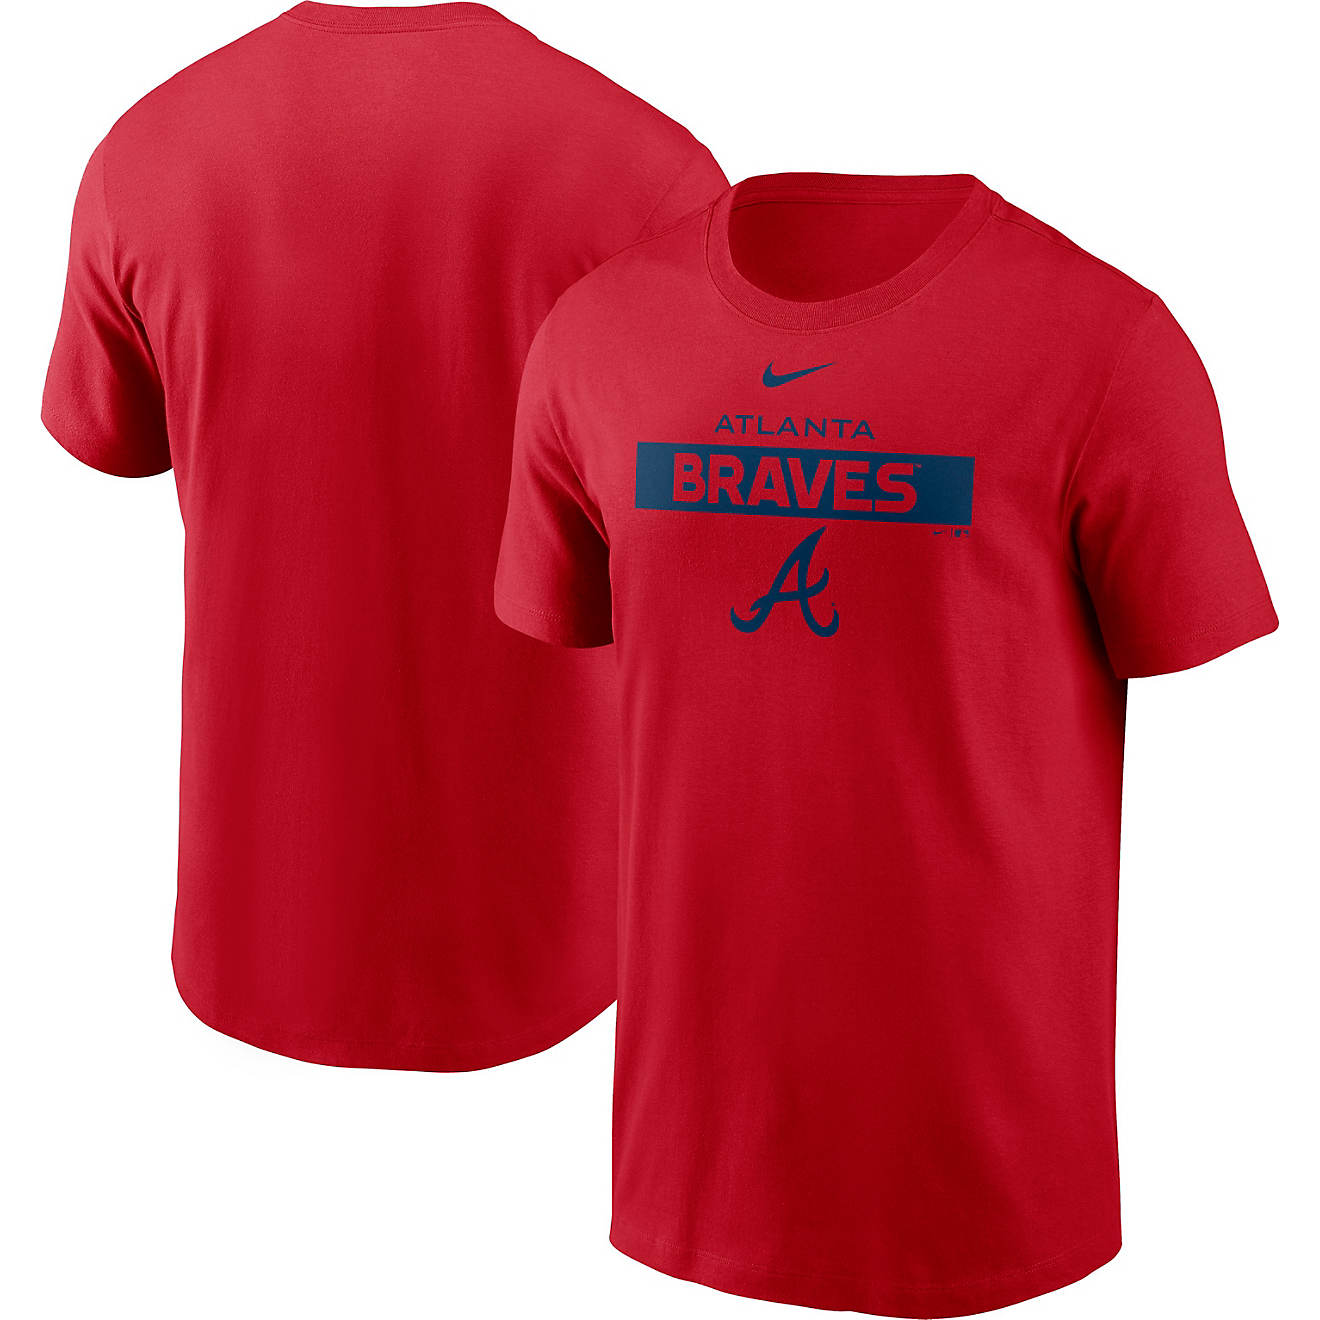 Nike Men's Atlanta Braves Team Issue T-shirt | Academy